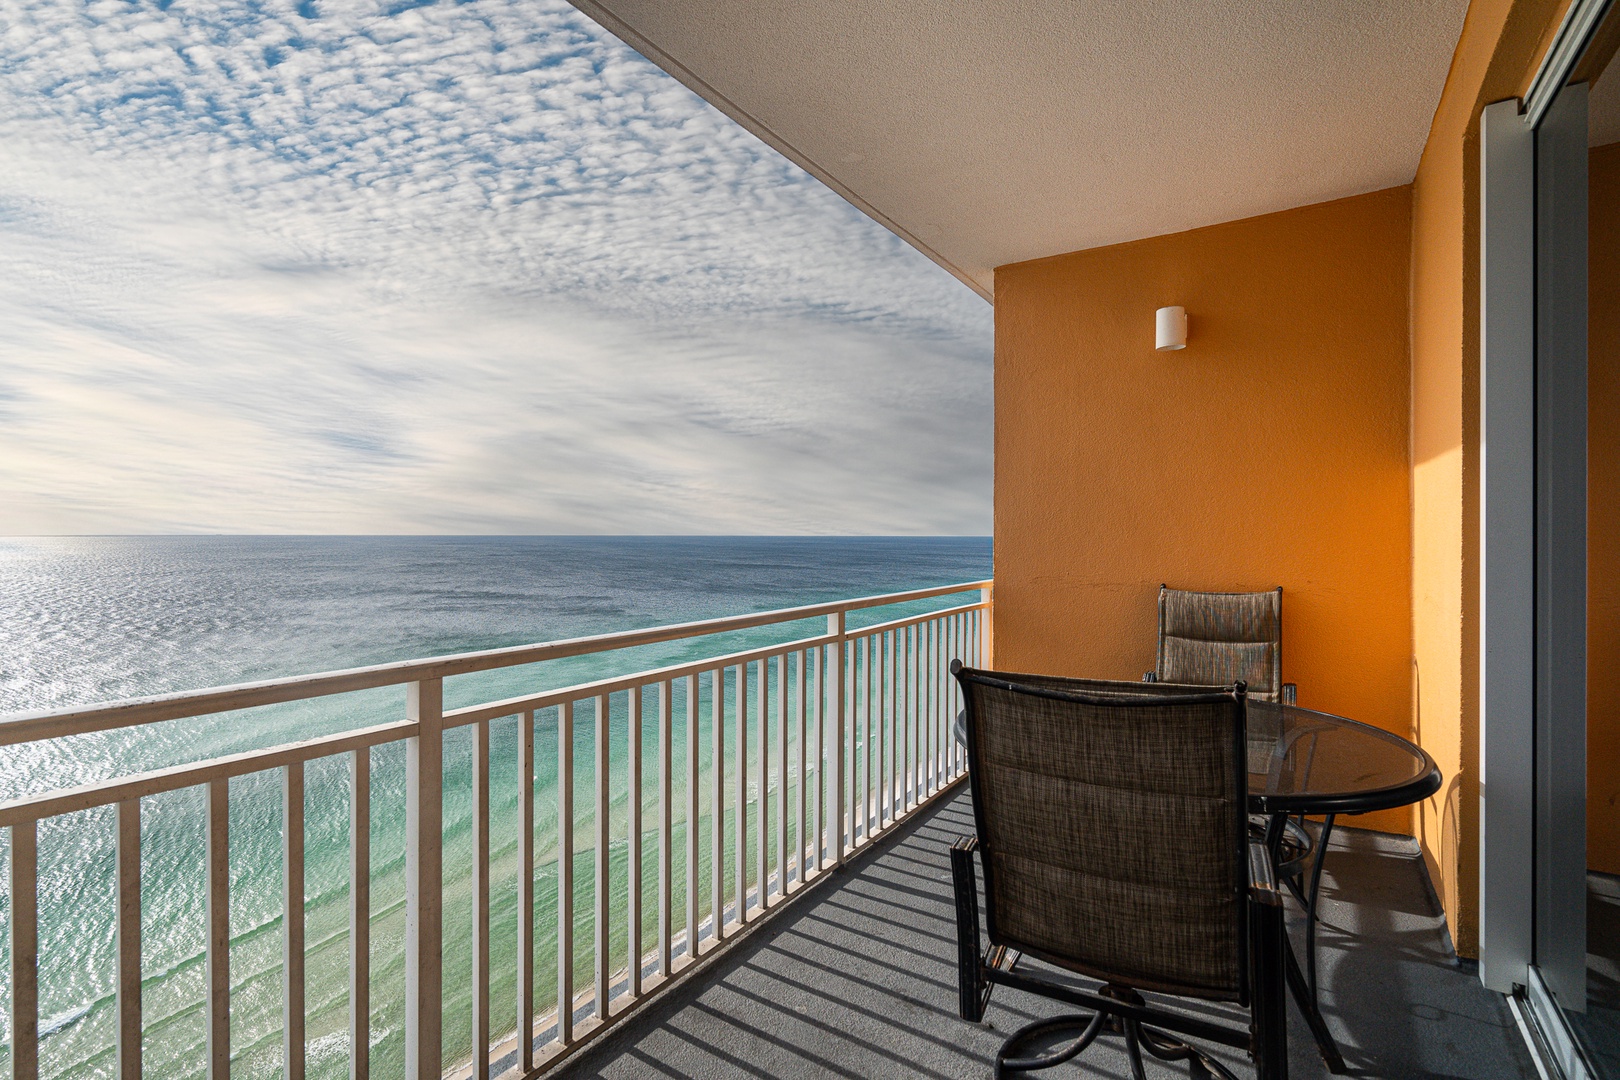 Dine alfresco with breathtaking beach views on the balcony